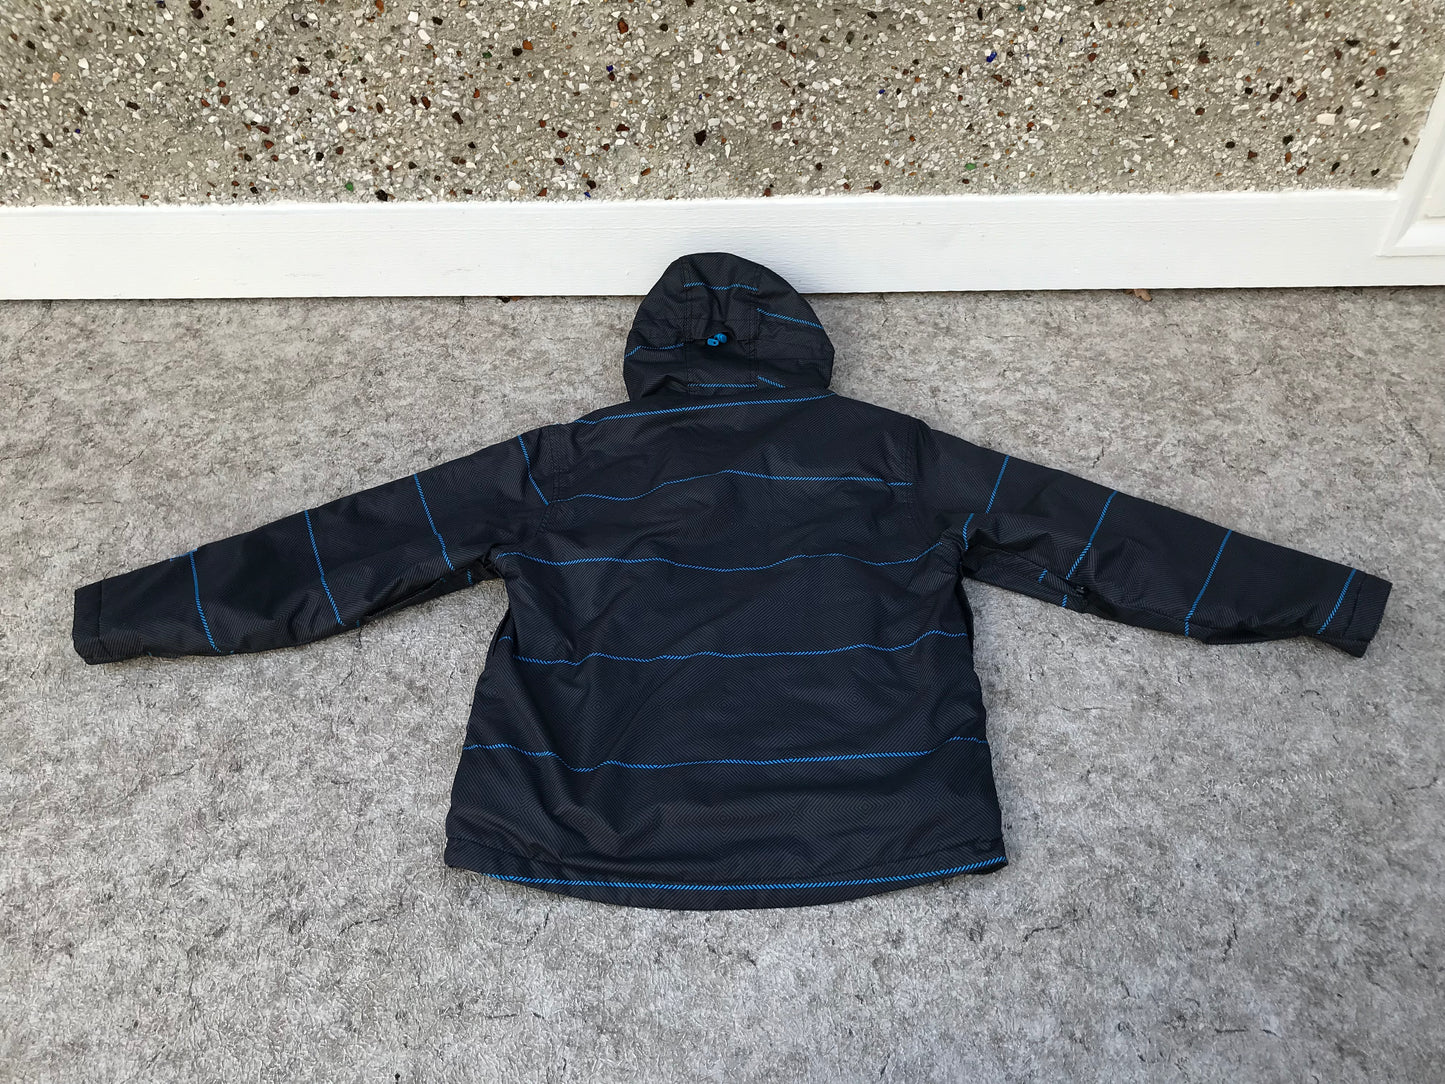 Winter Coat Child Size 12-14 Ripzone Core Black Blue With Snow Belt New Demo Model